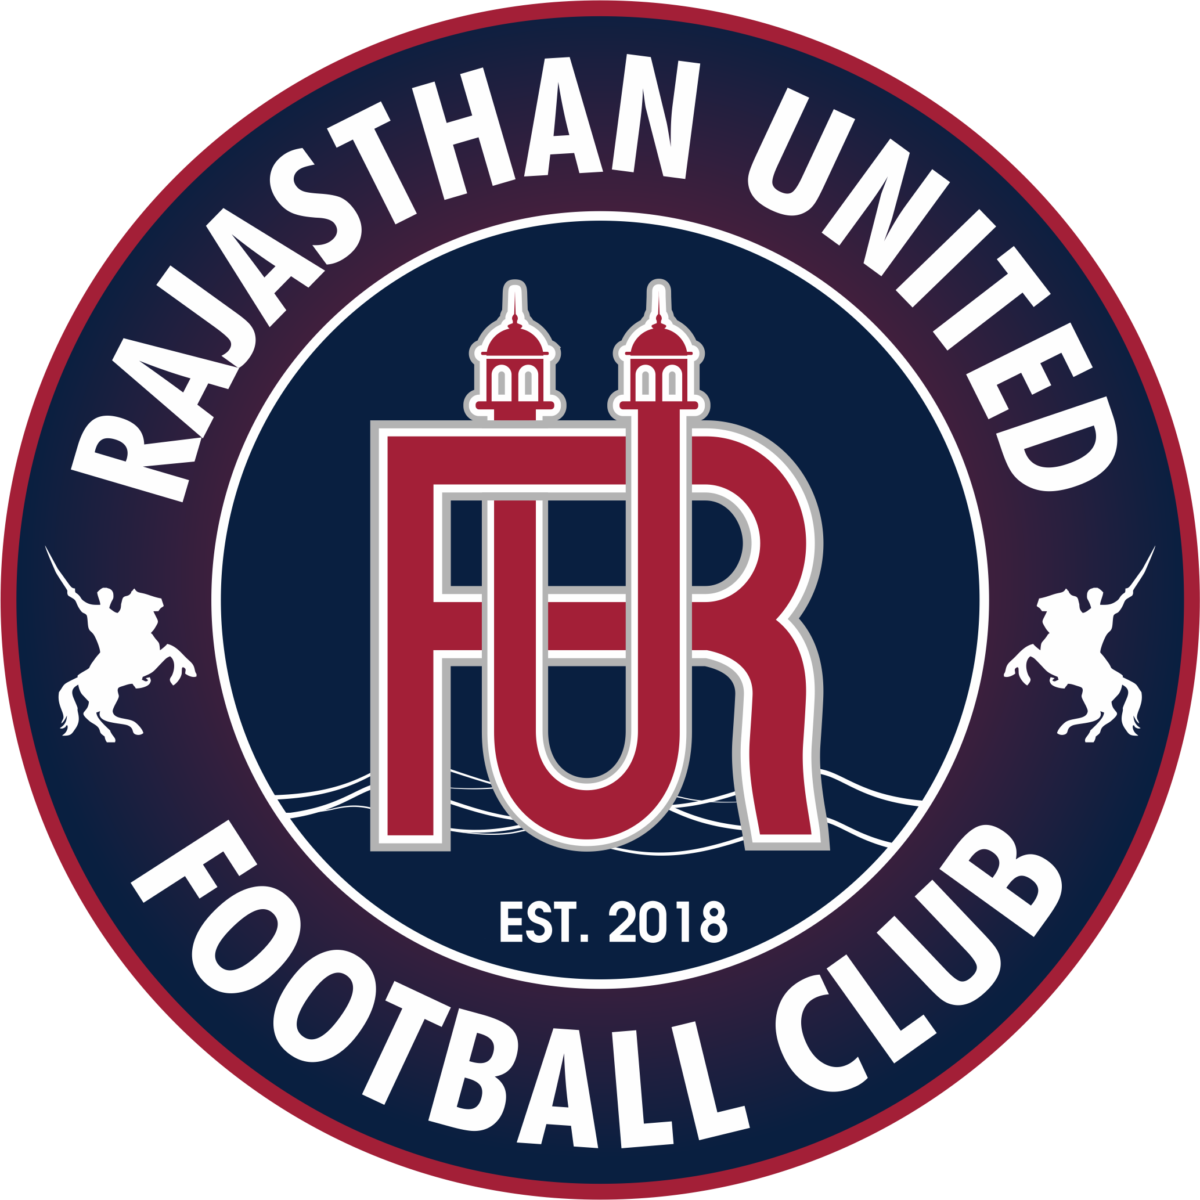 Rajasthan United FC